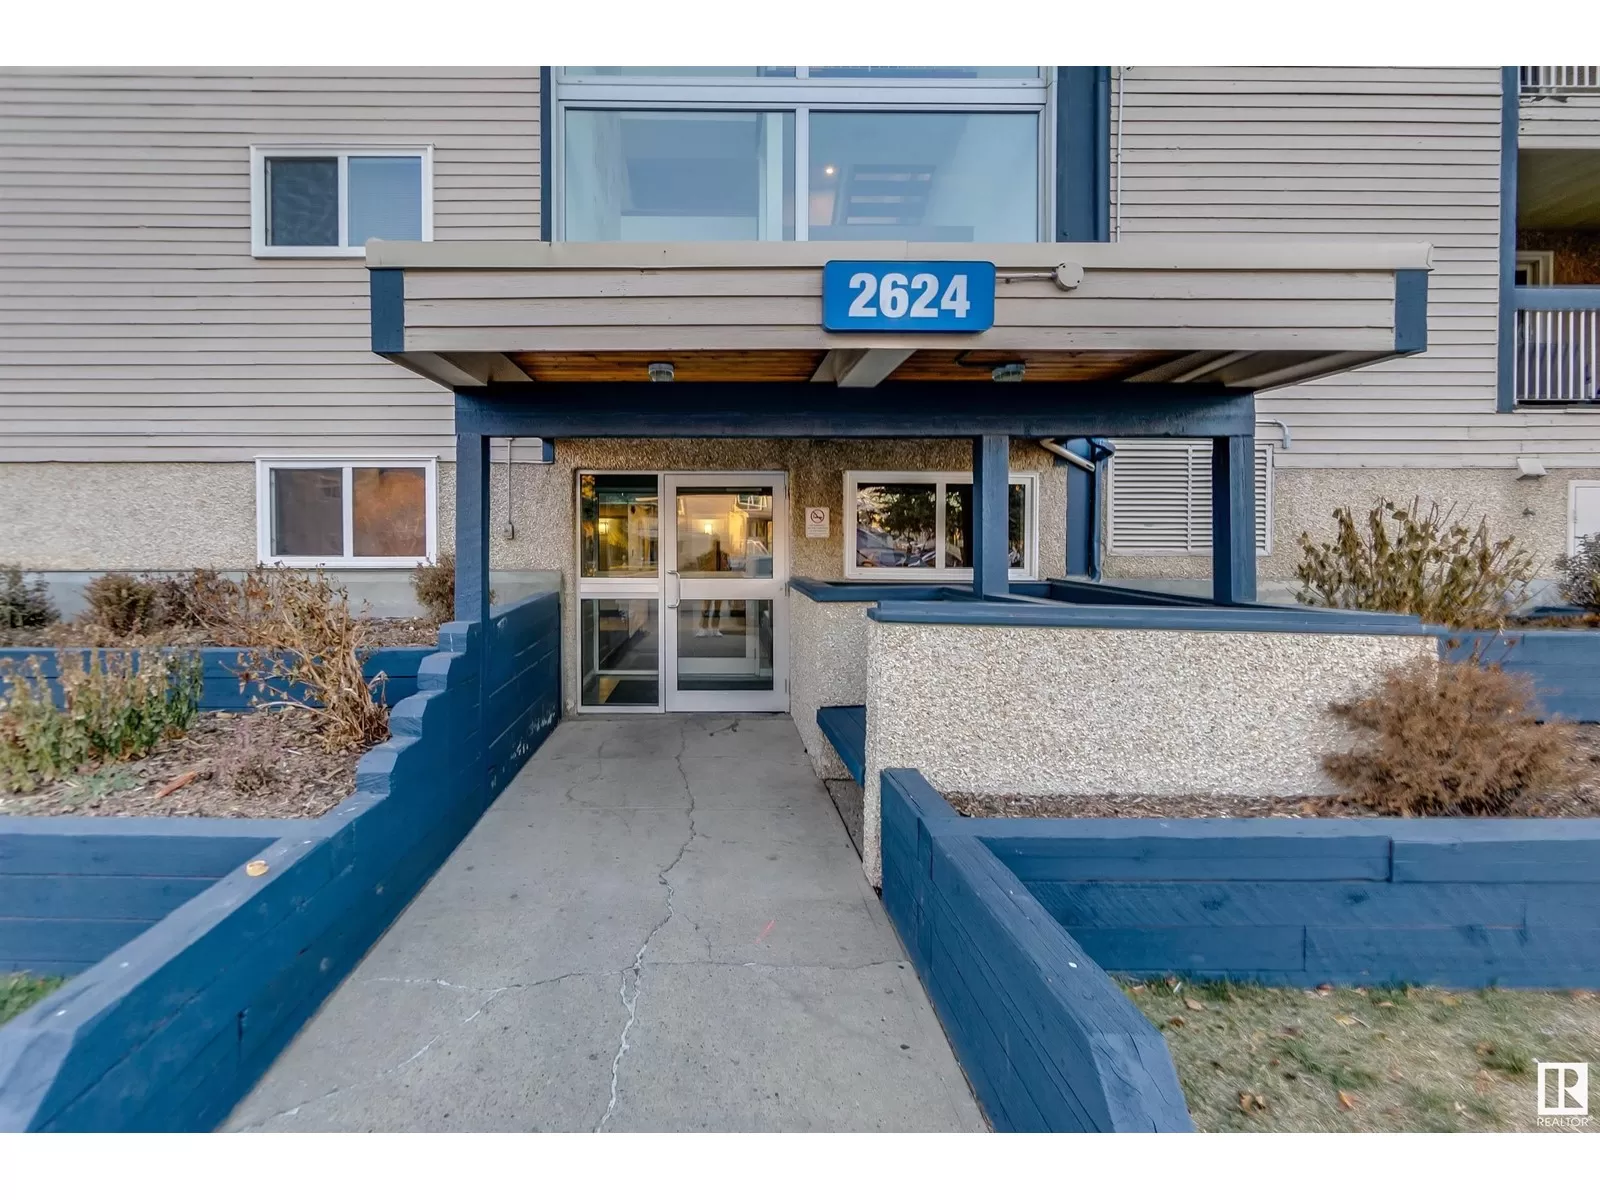 Apartment for rent: 201 2624 Millwoods Rd E Nw, Edmonton, Alberta T6L 5K7